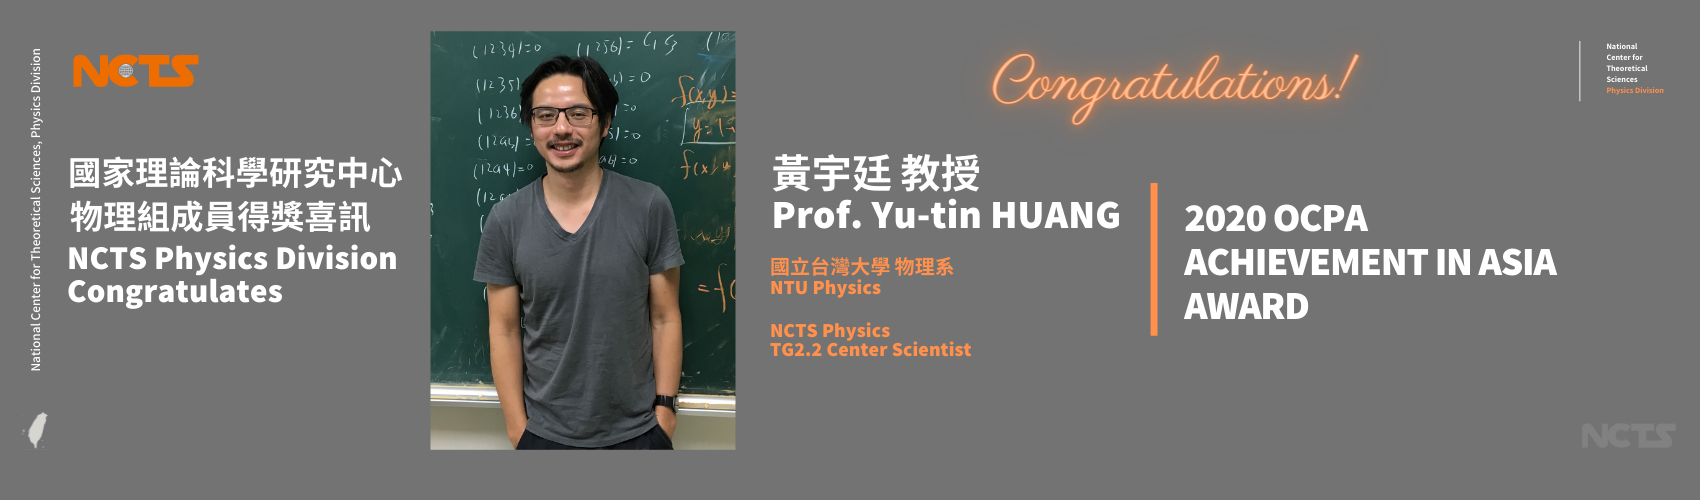 NCTS Congratulates Prof. Yu-tin Huang on Winning 2020 OCPA Award